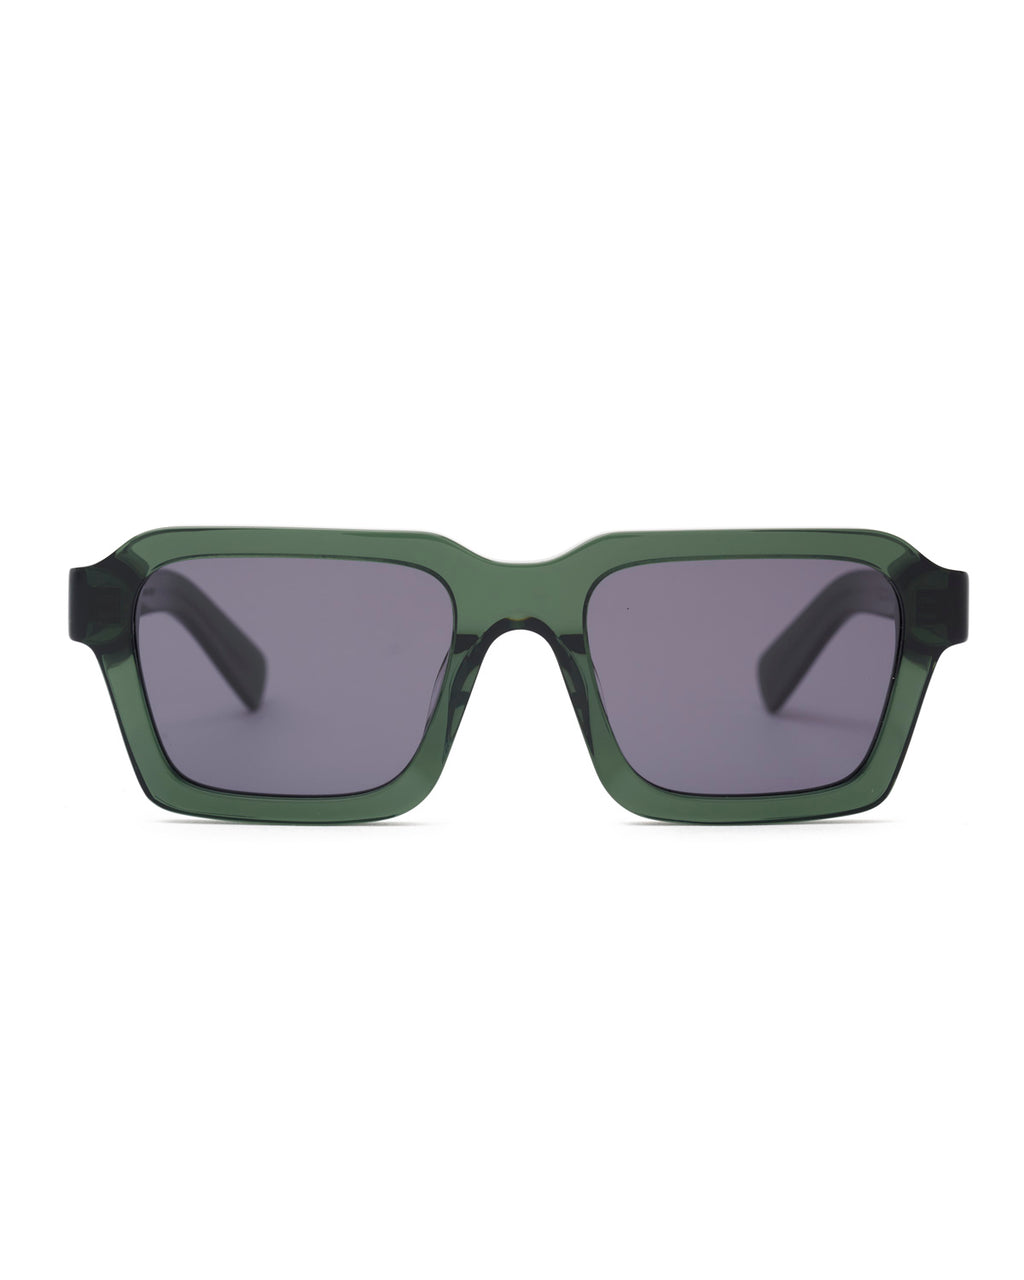 Staunton Post Modern Primitive Eye Protection - Green Smoke